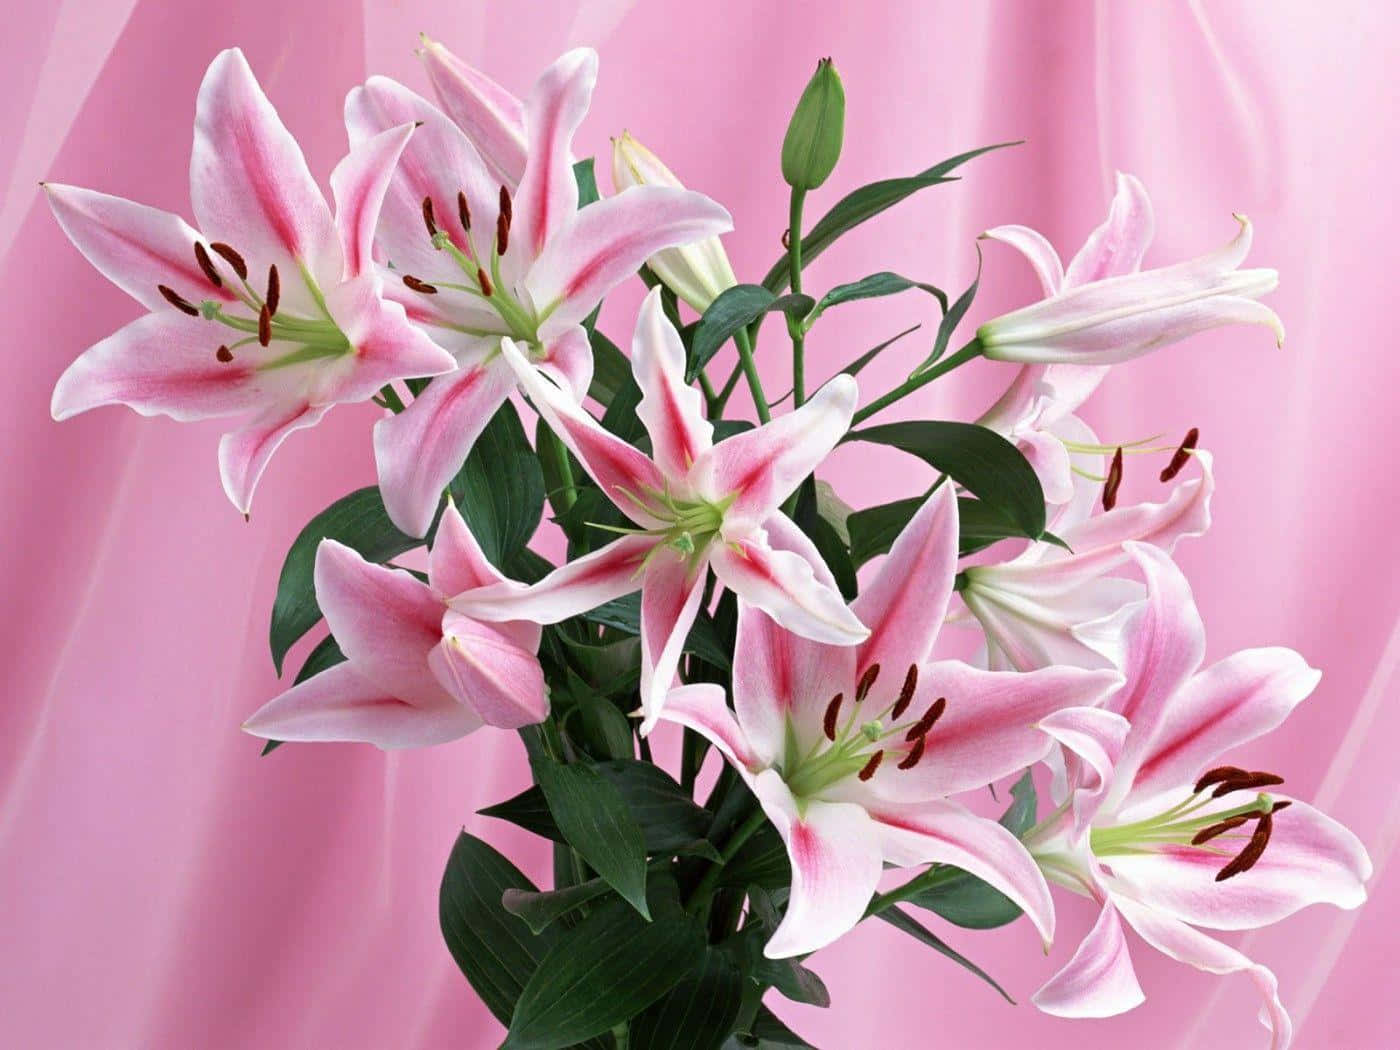 Stargazer Lily Flowers In A Vase Wallpaper